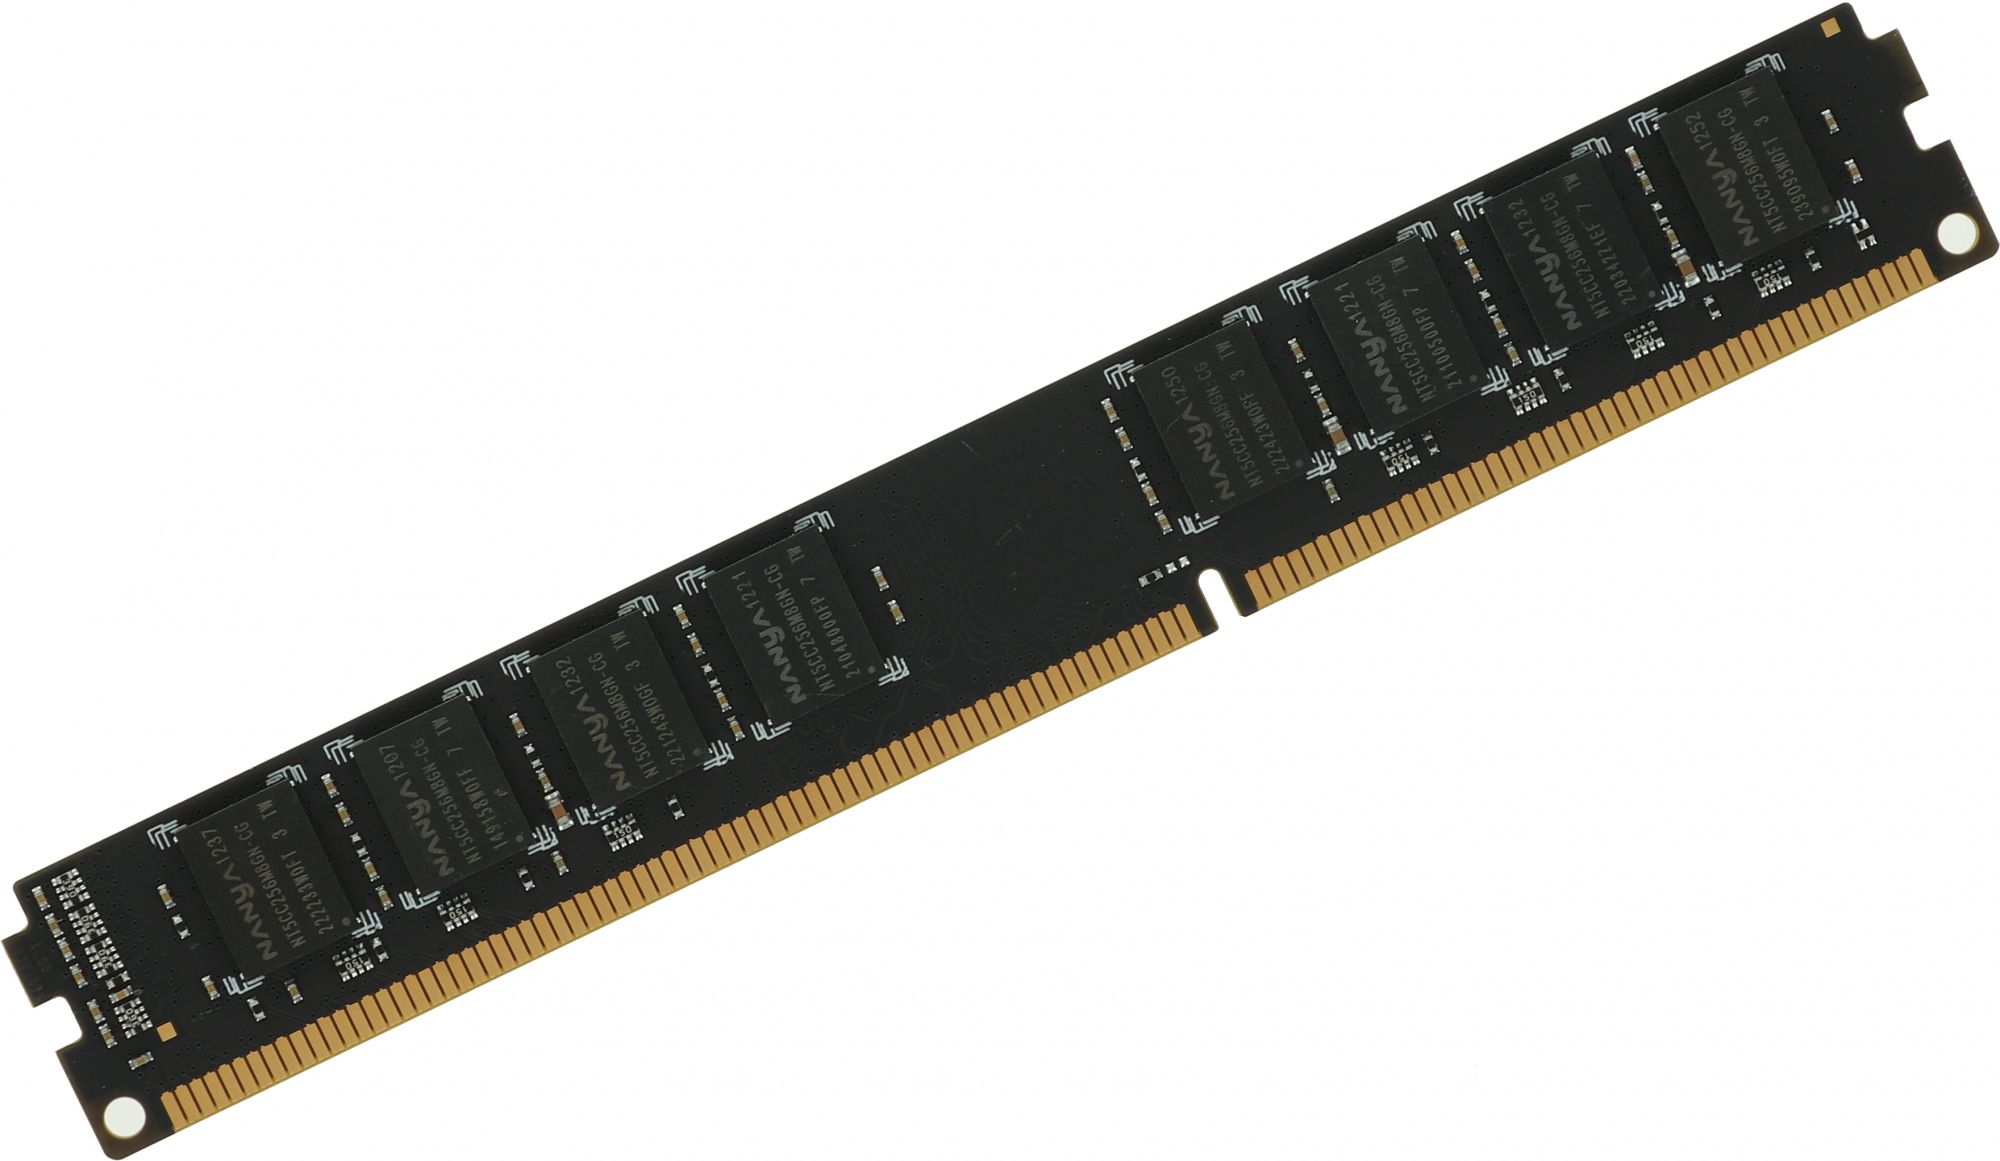 Память оперативная DDR3 Digma 4Gb 1333MHz (DGMAD31333004D) used kingston memoria ddr3 4gb 1333mhz rams kvr1333d3n9 4g 4gb 1333mhz ddr3 ram desktop memory for amd and intel 1pcs